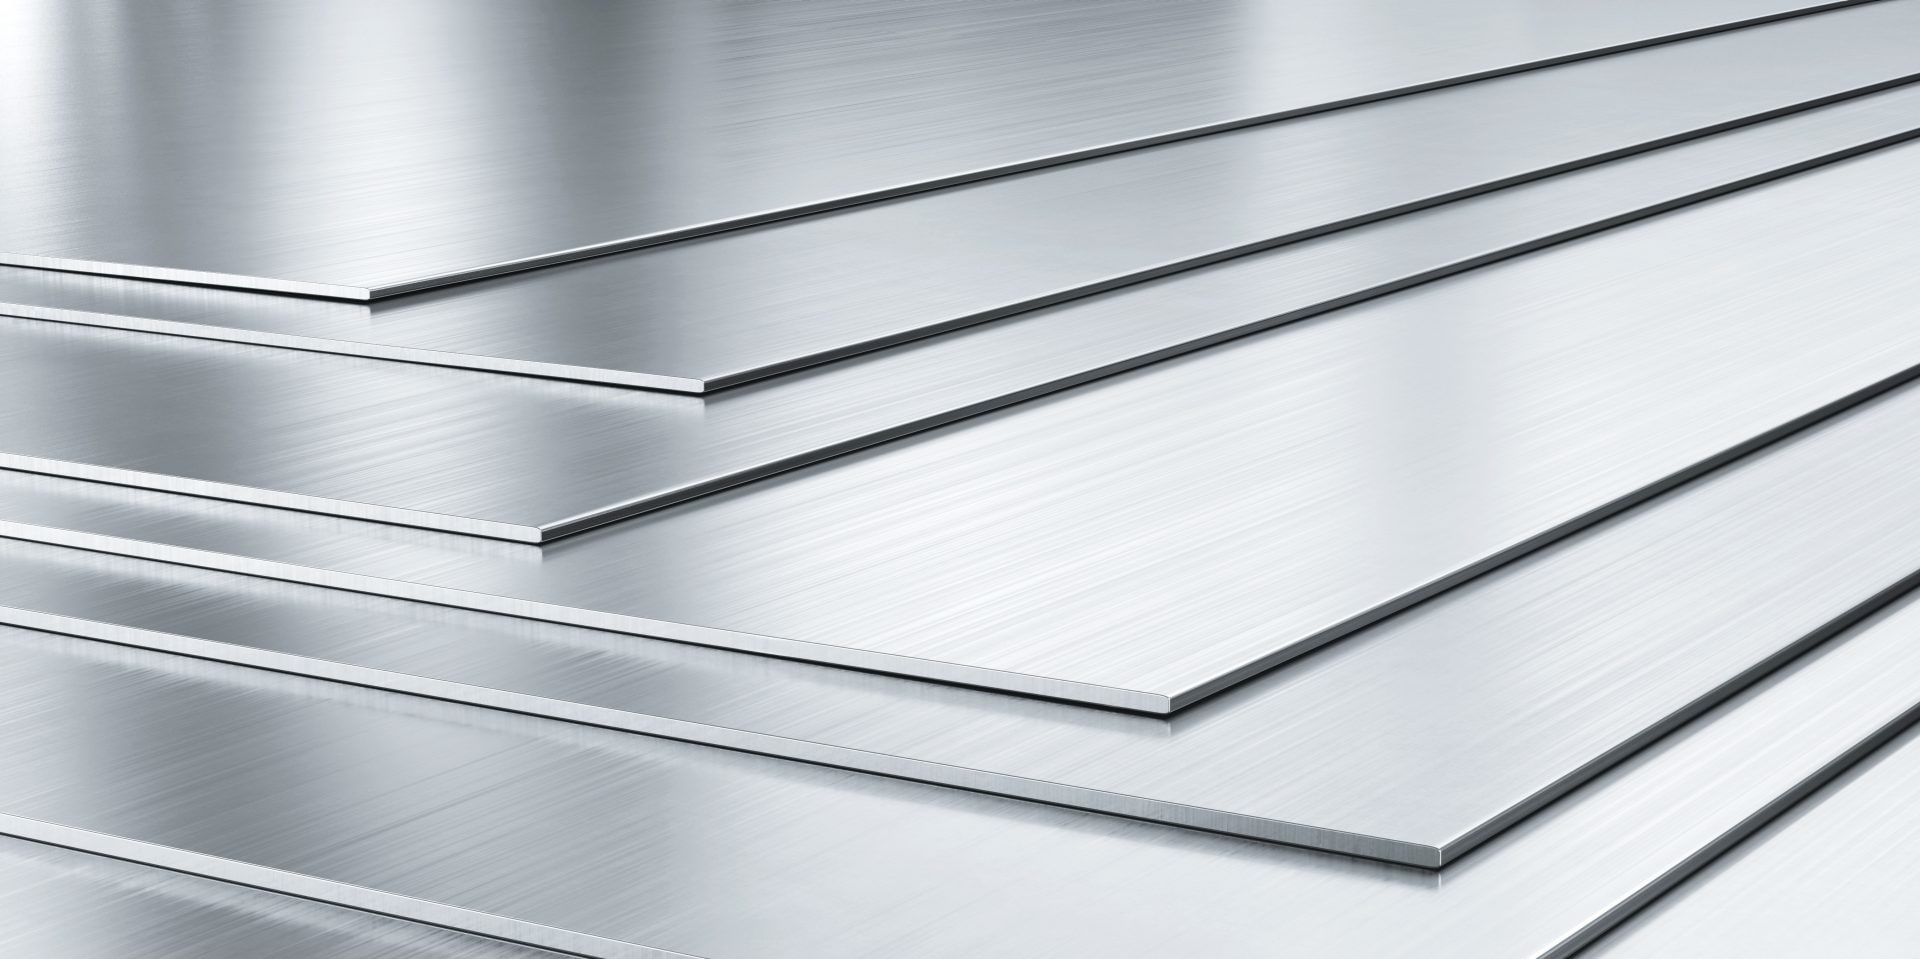 Image of stainless steel sheet metal